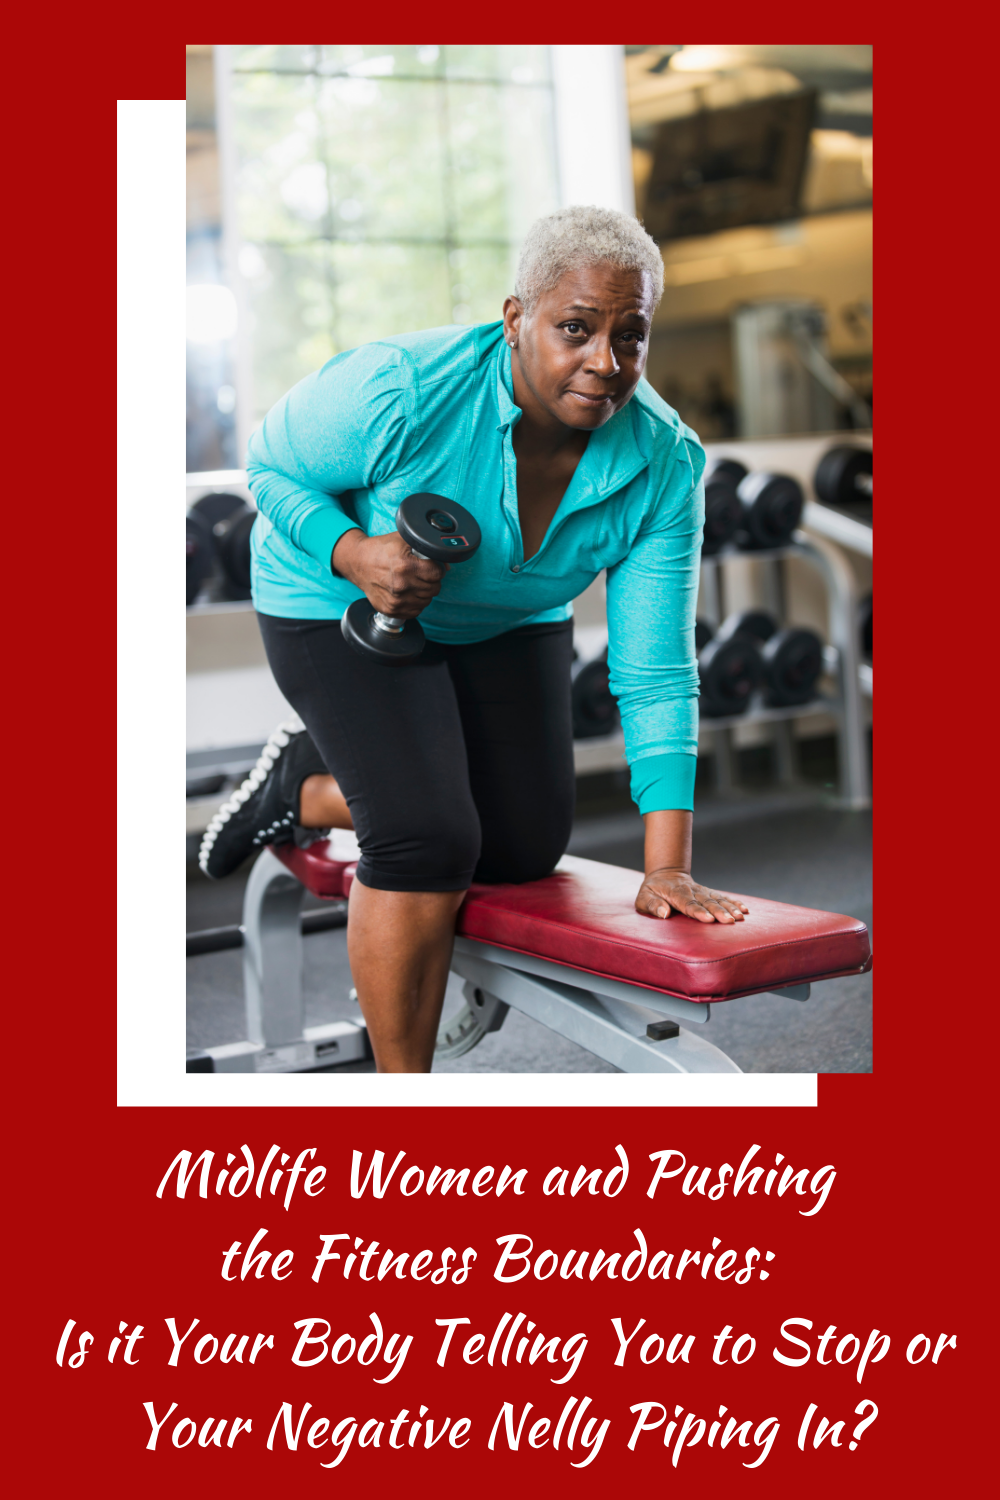 Midlife Women and Pushing the Fitness Boundaries